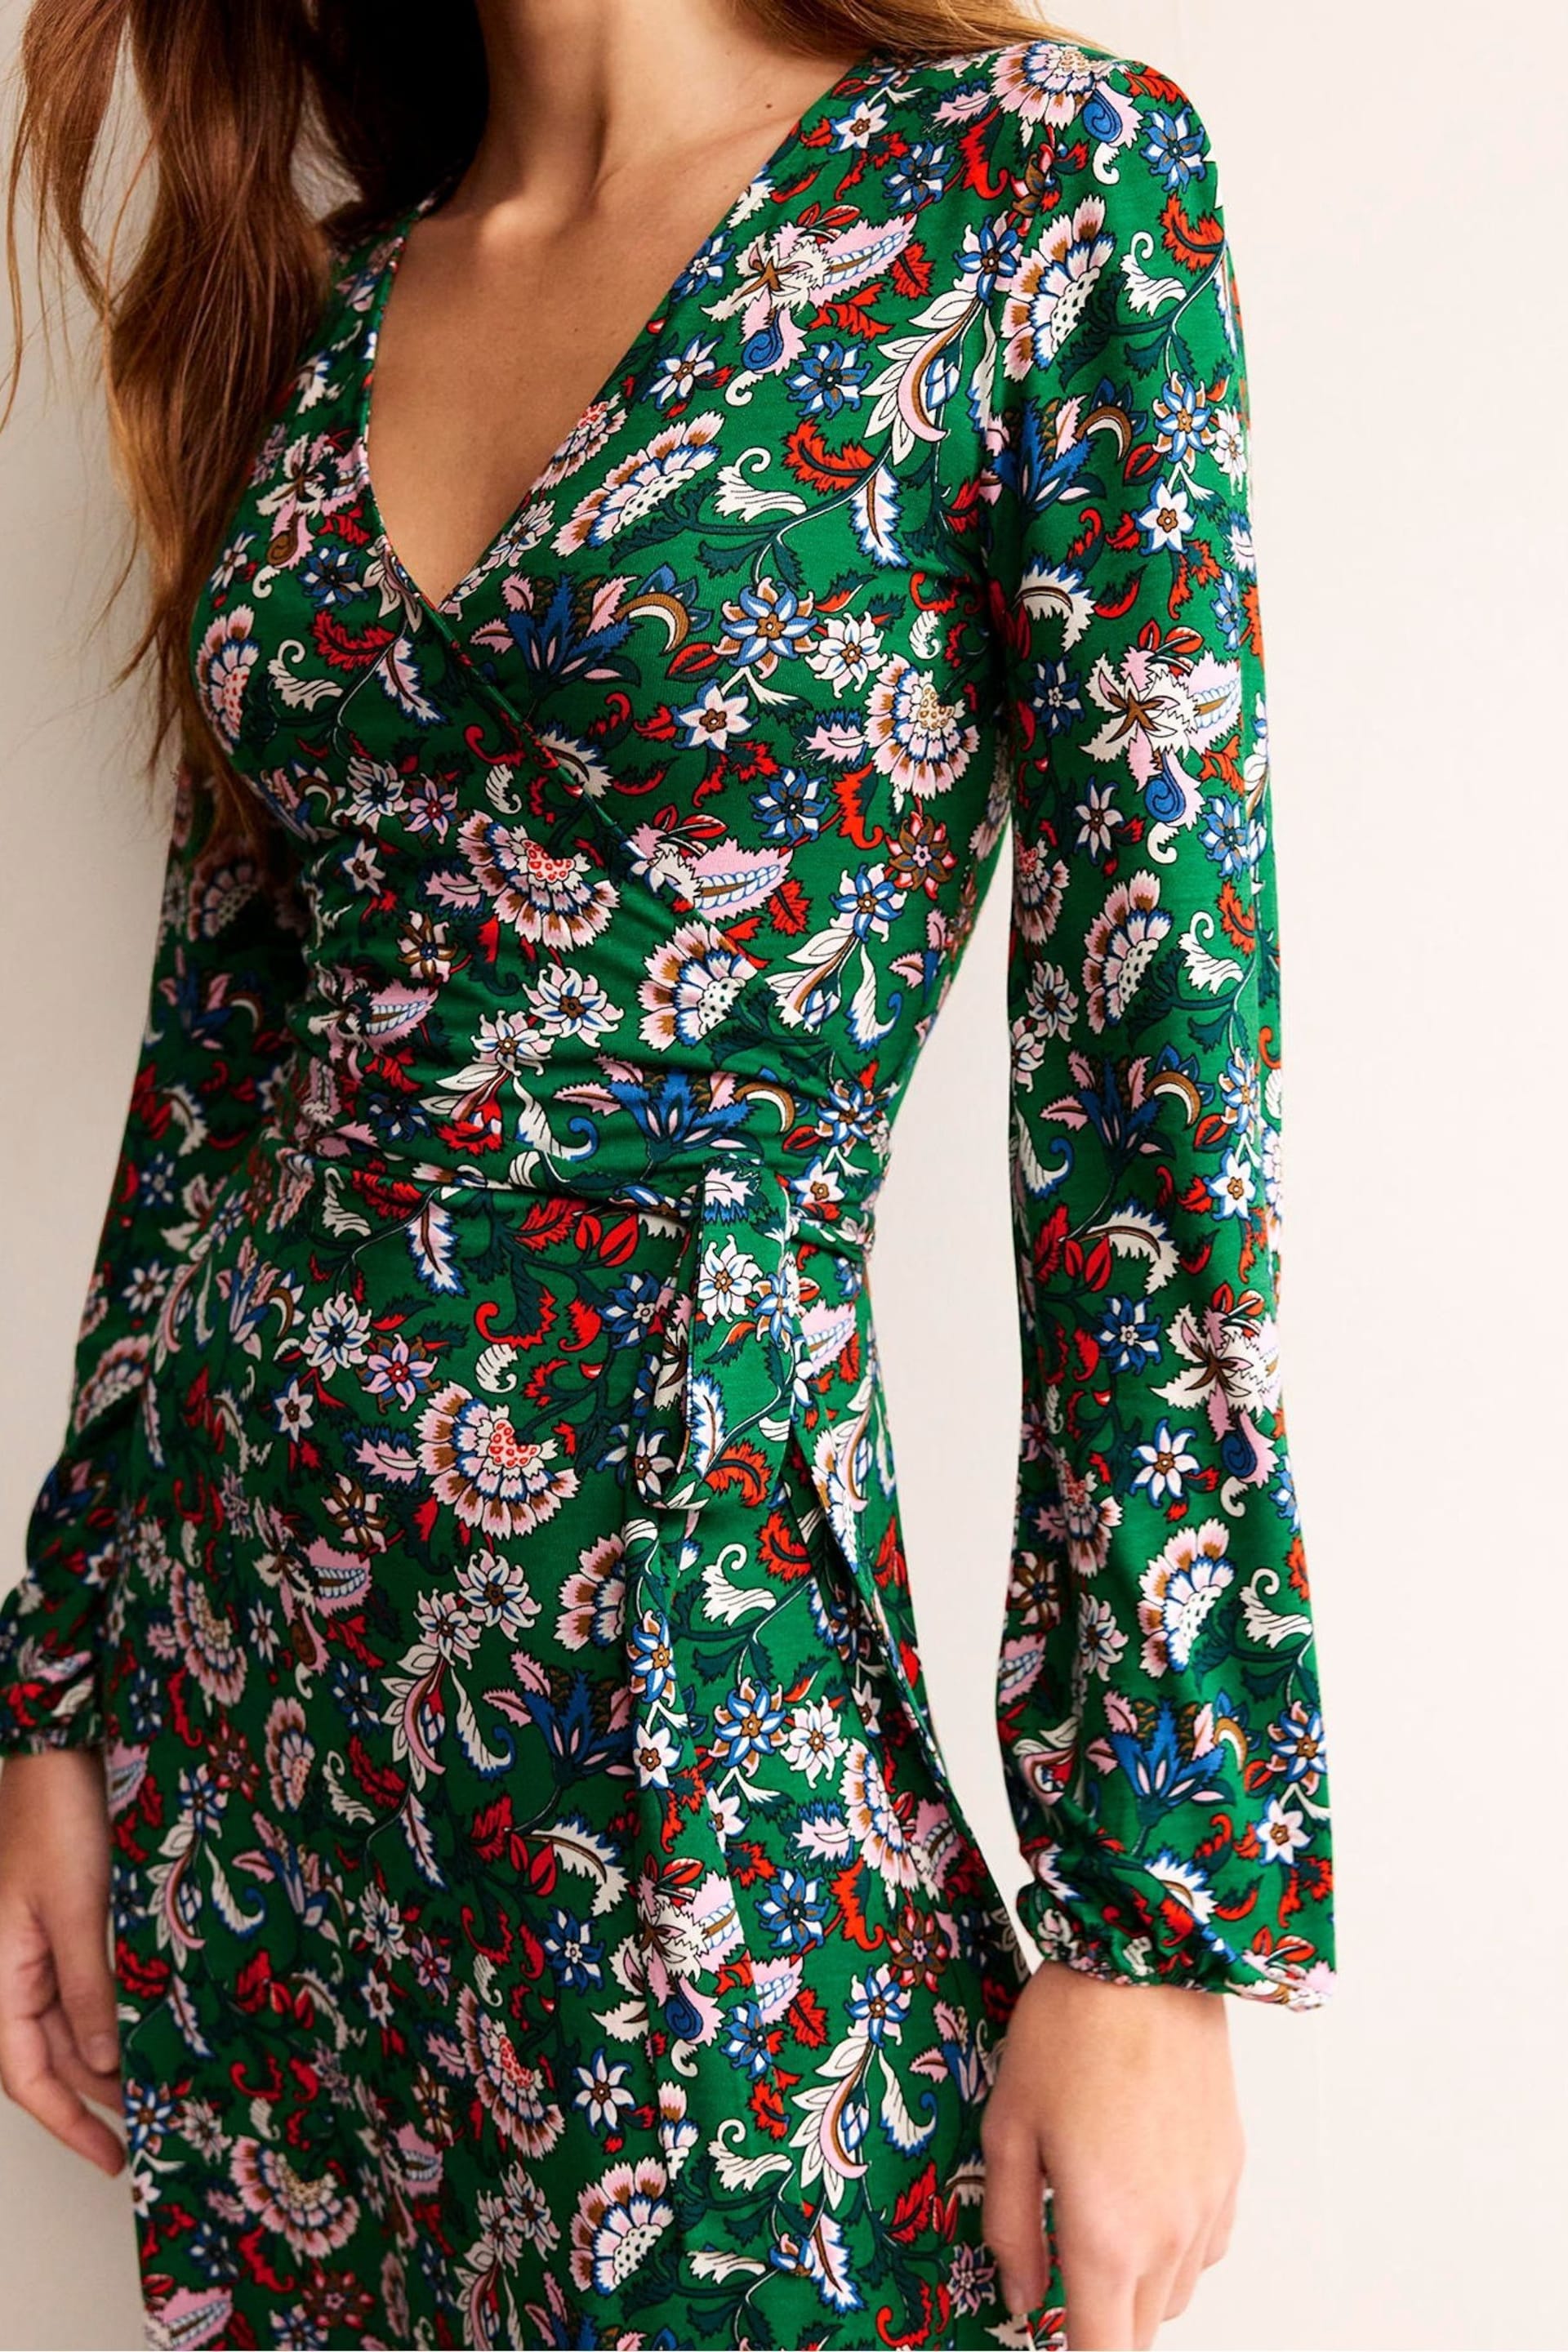 Boden Green Joanna Jersey Midi Wrap Dress - Image 3 of 5